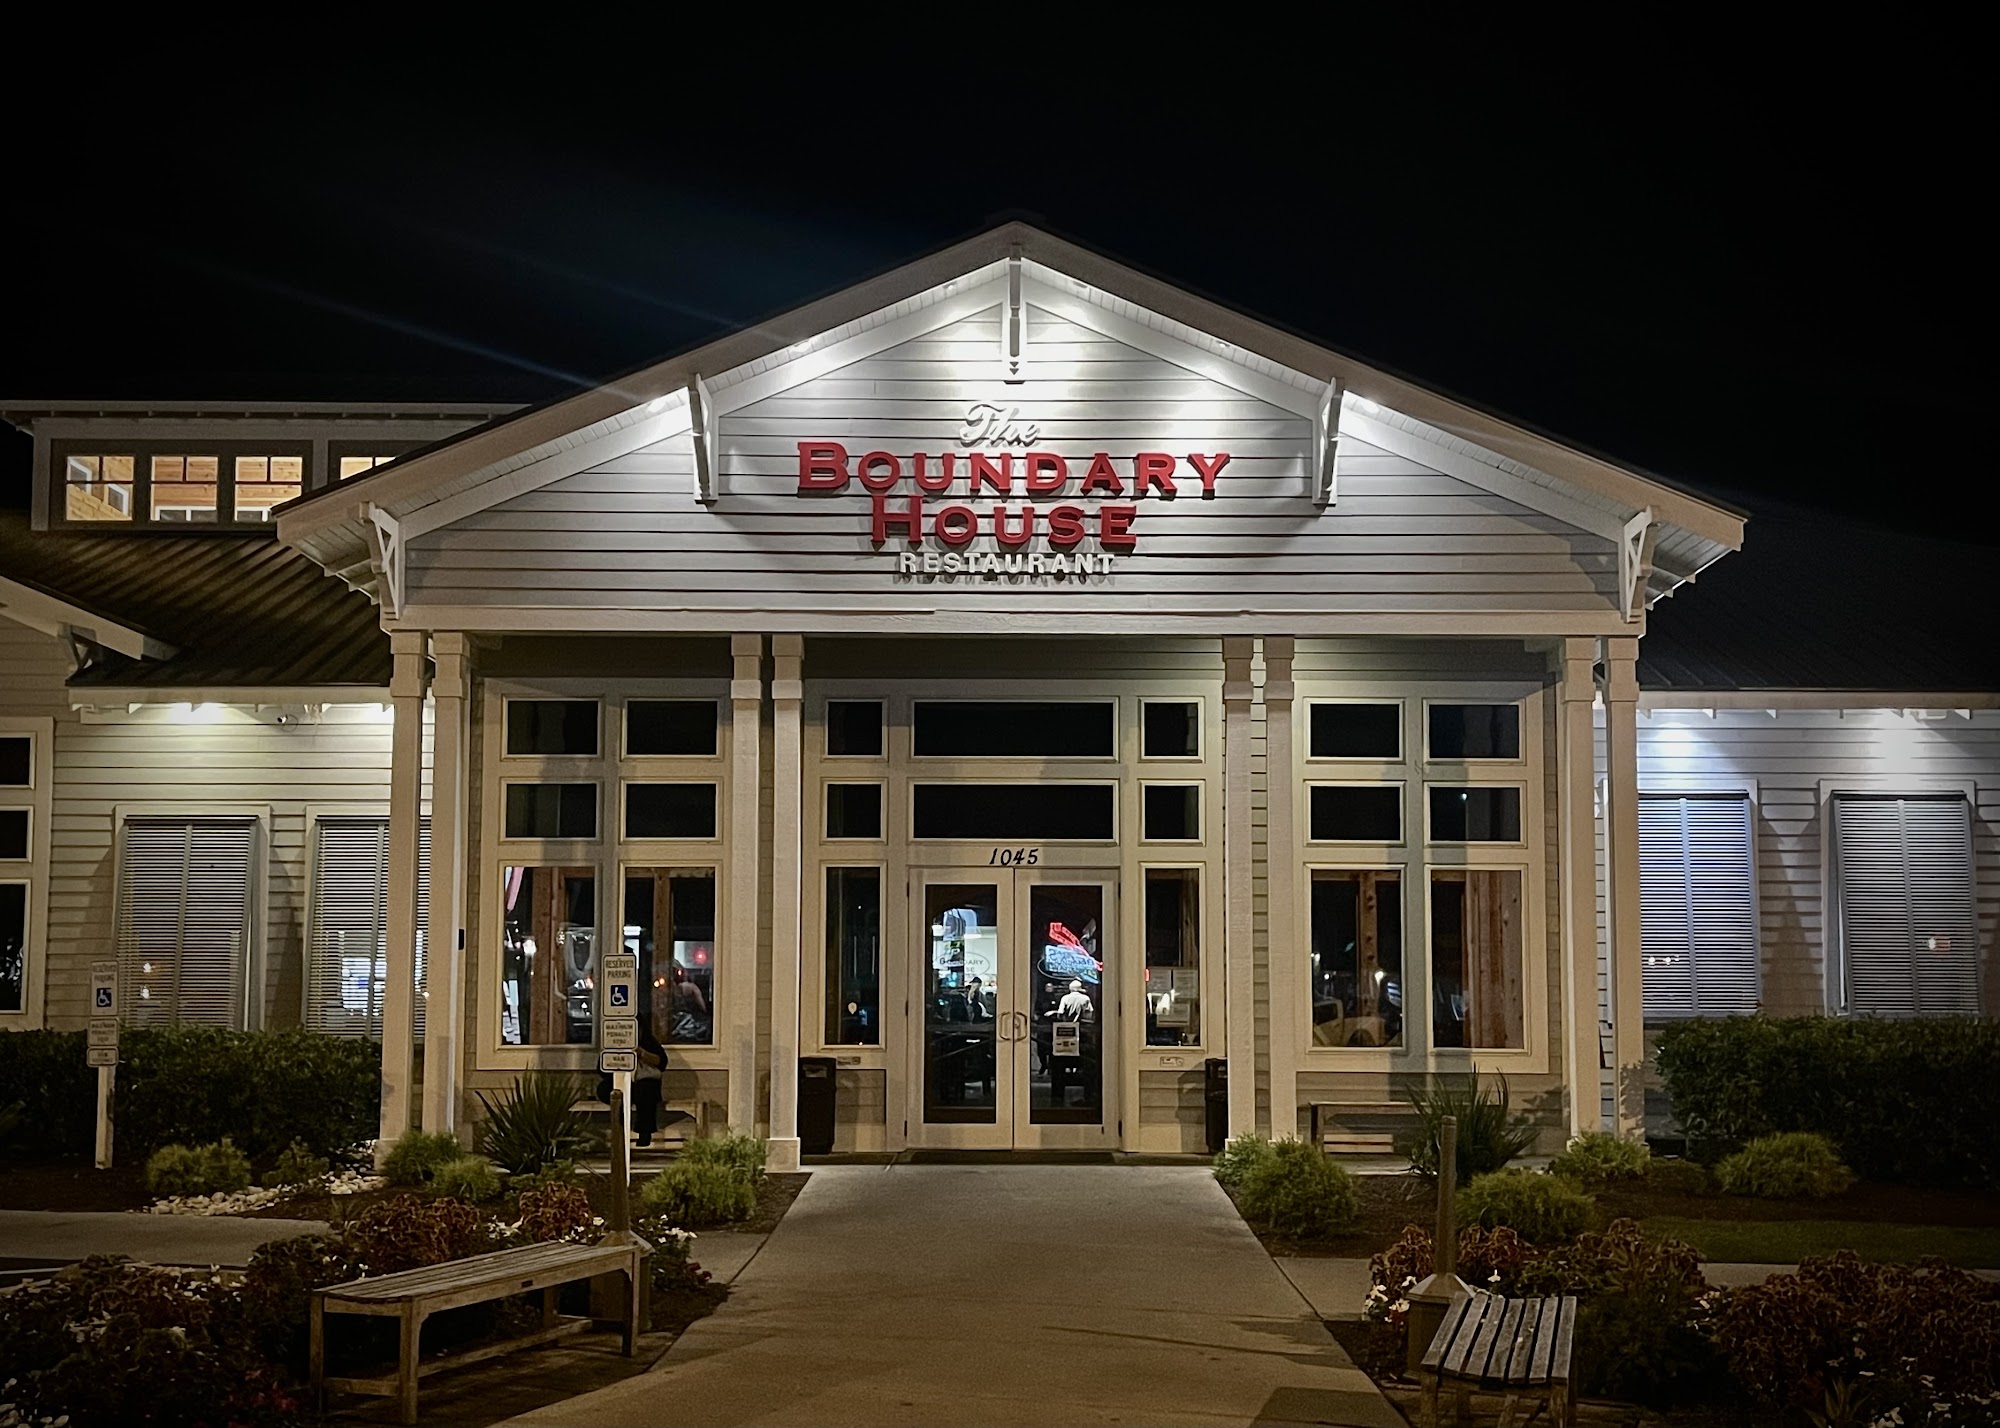 The Boundary House Restaurant